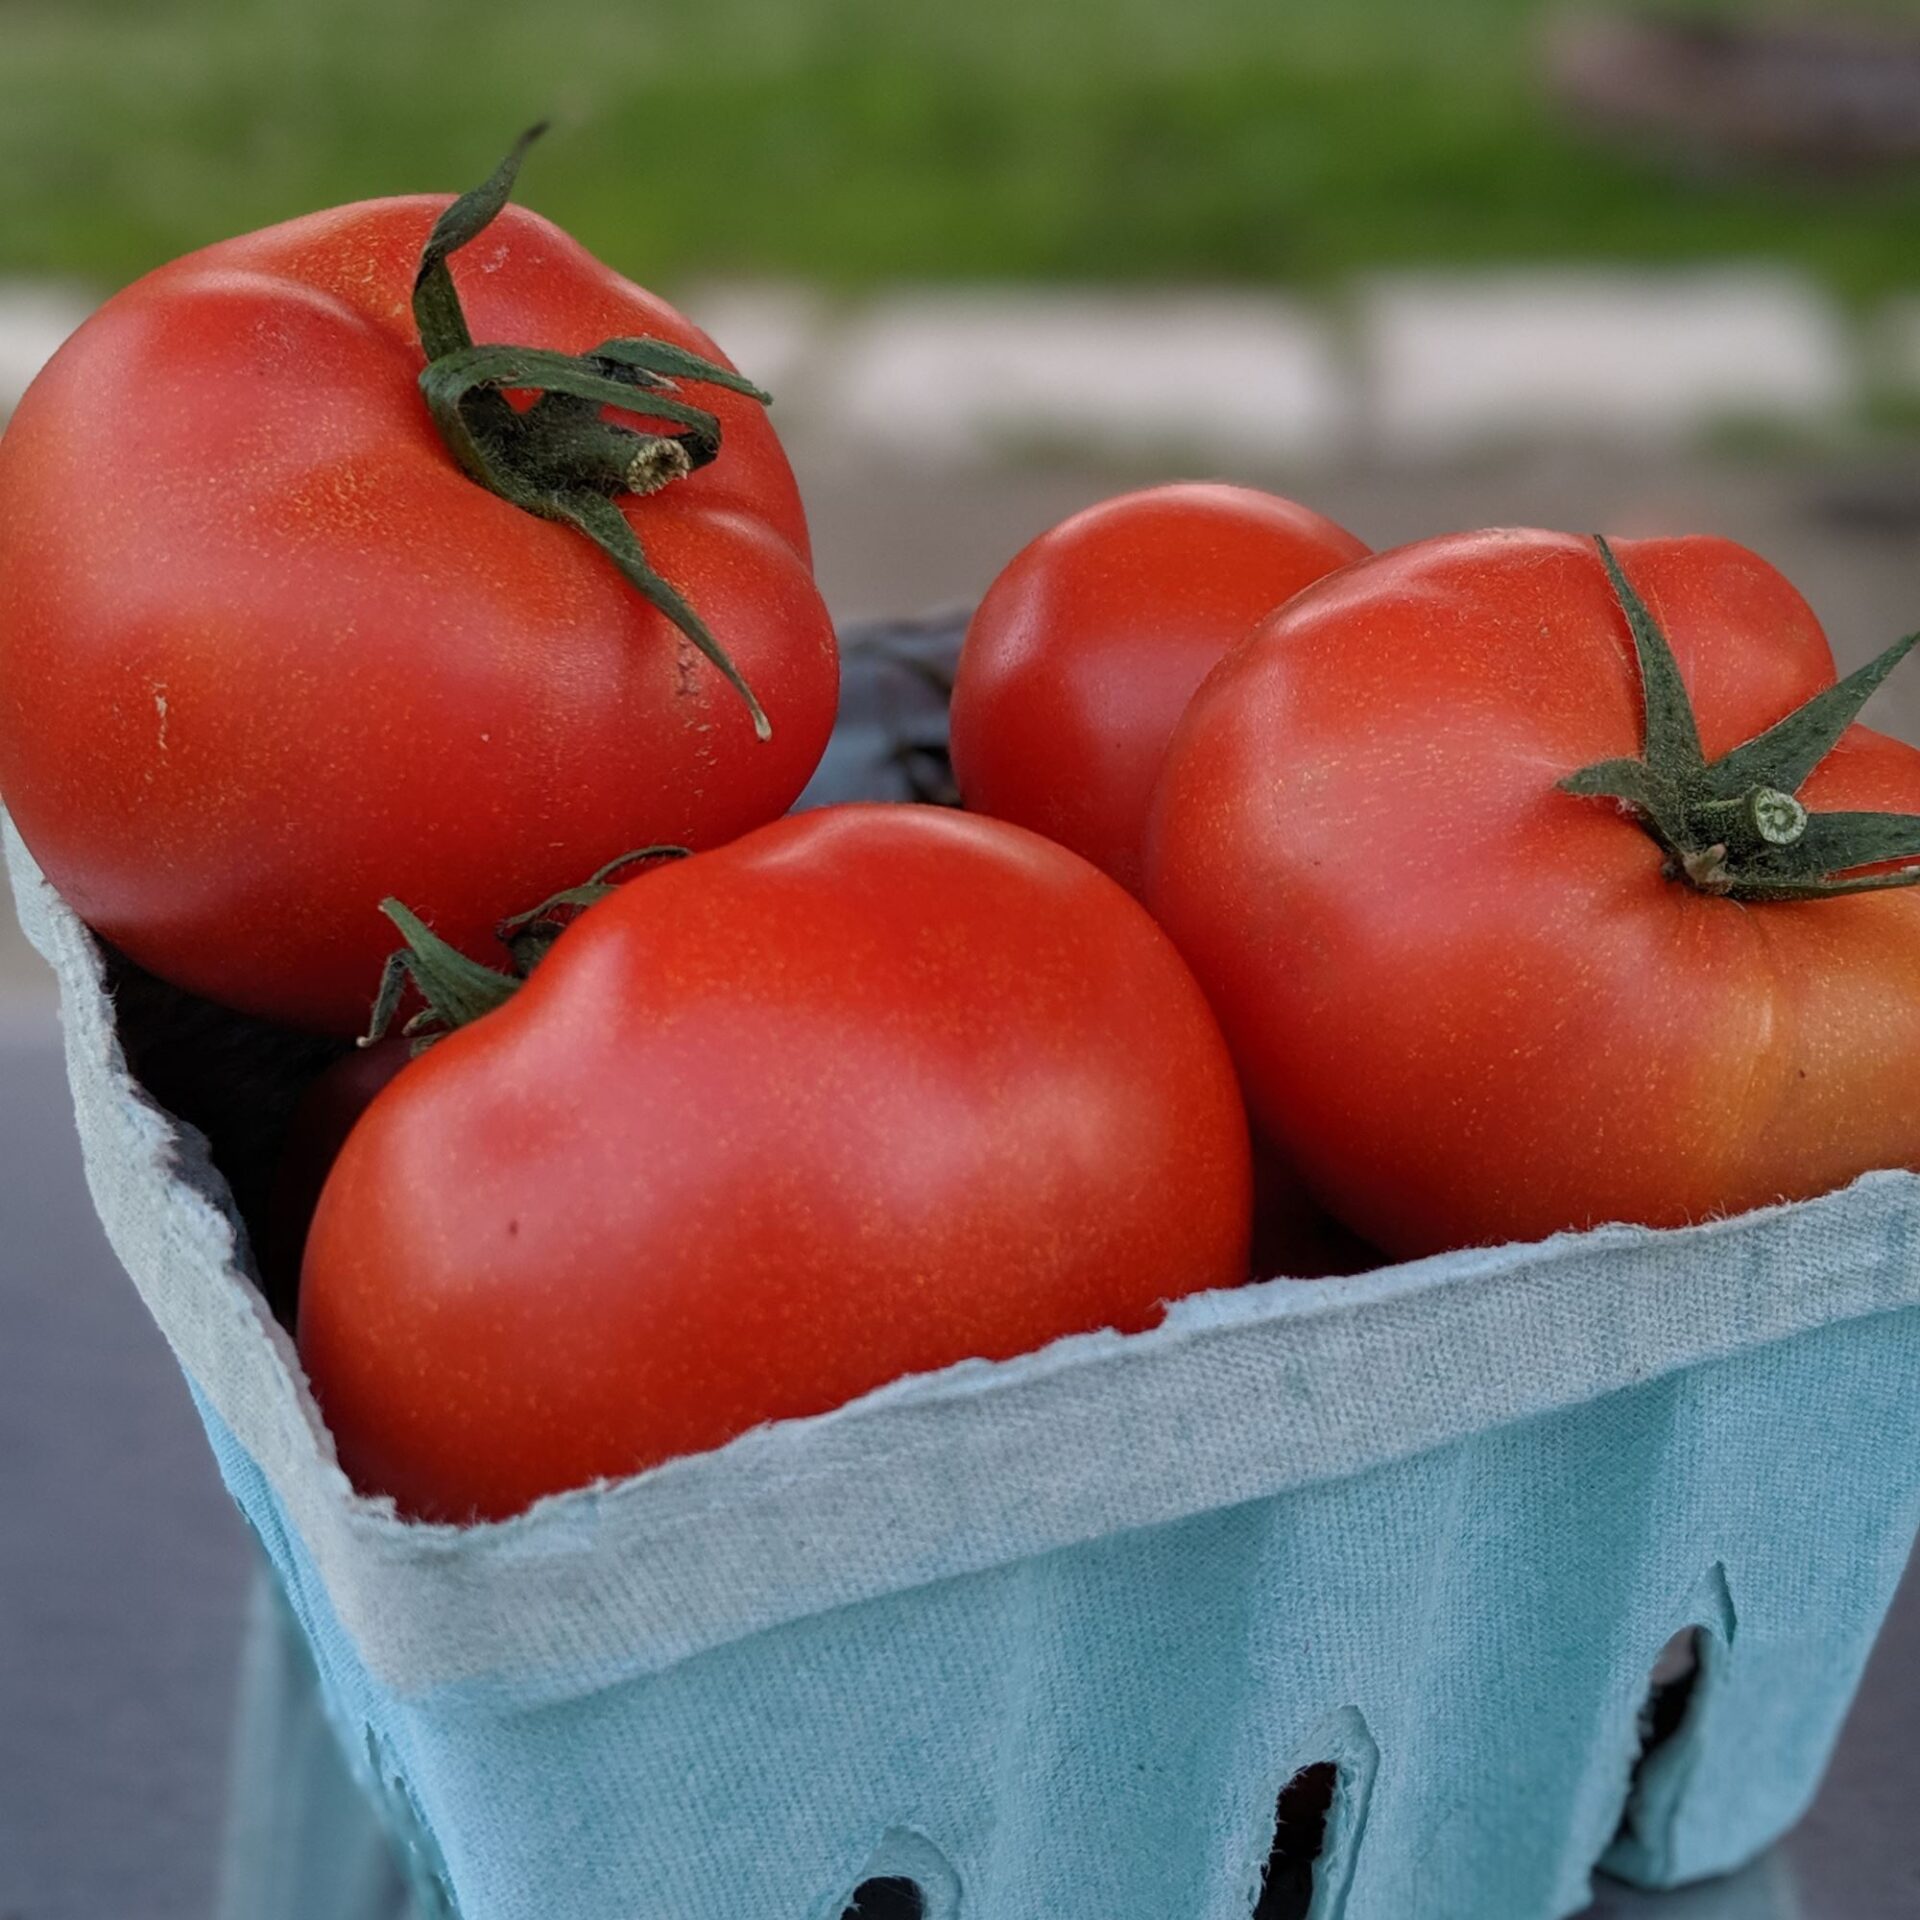 https://baybranchfarm.com/wp-content/uploads/2019/07/slicer-tomatoes.jpg